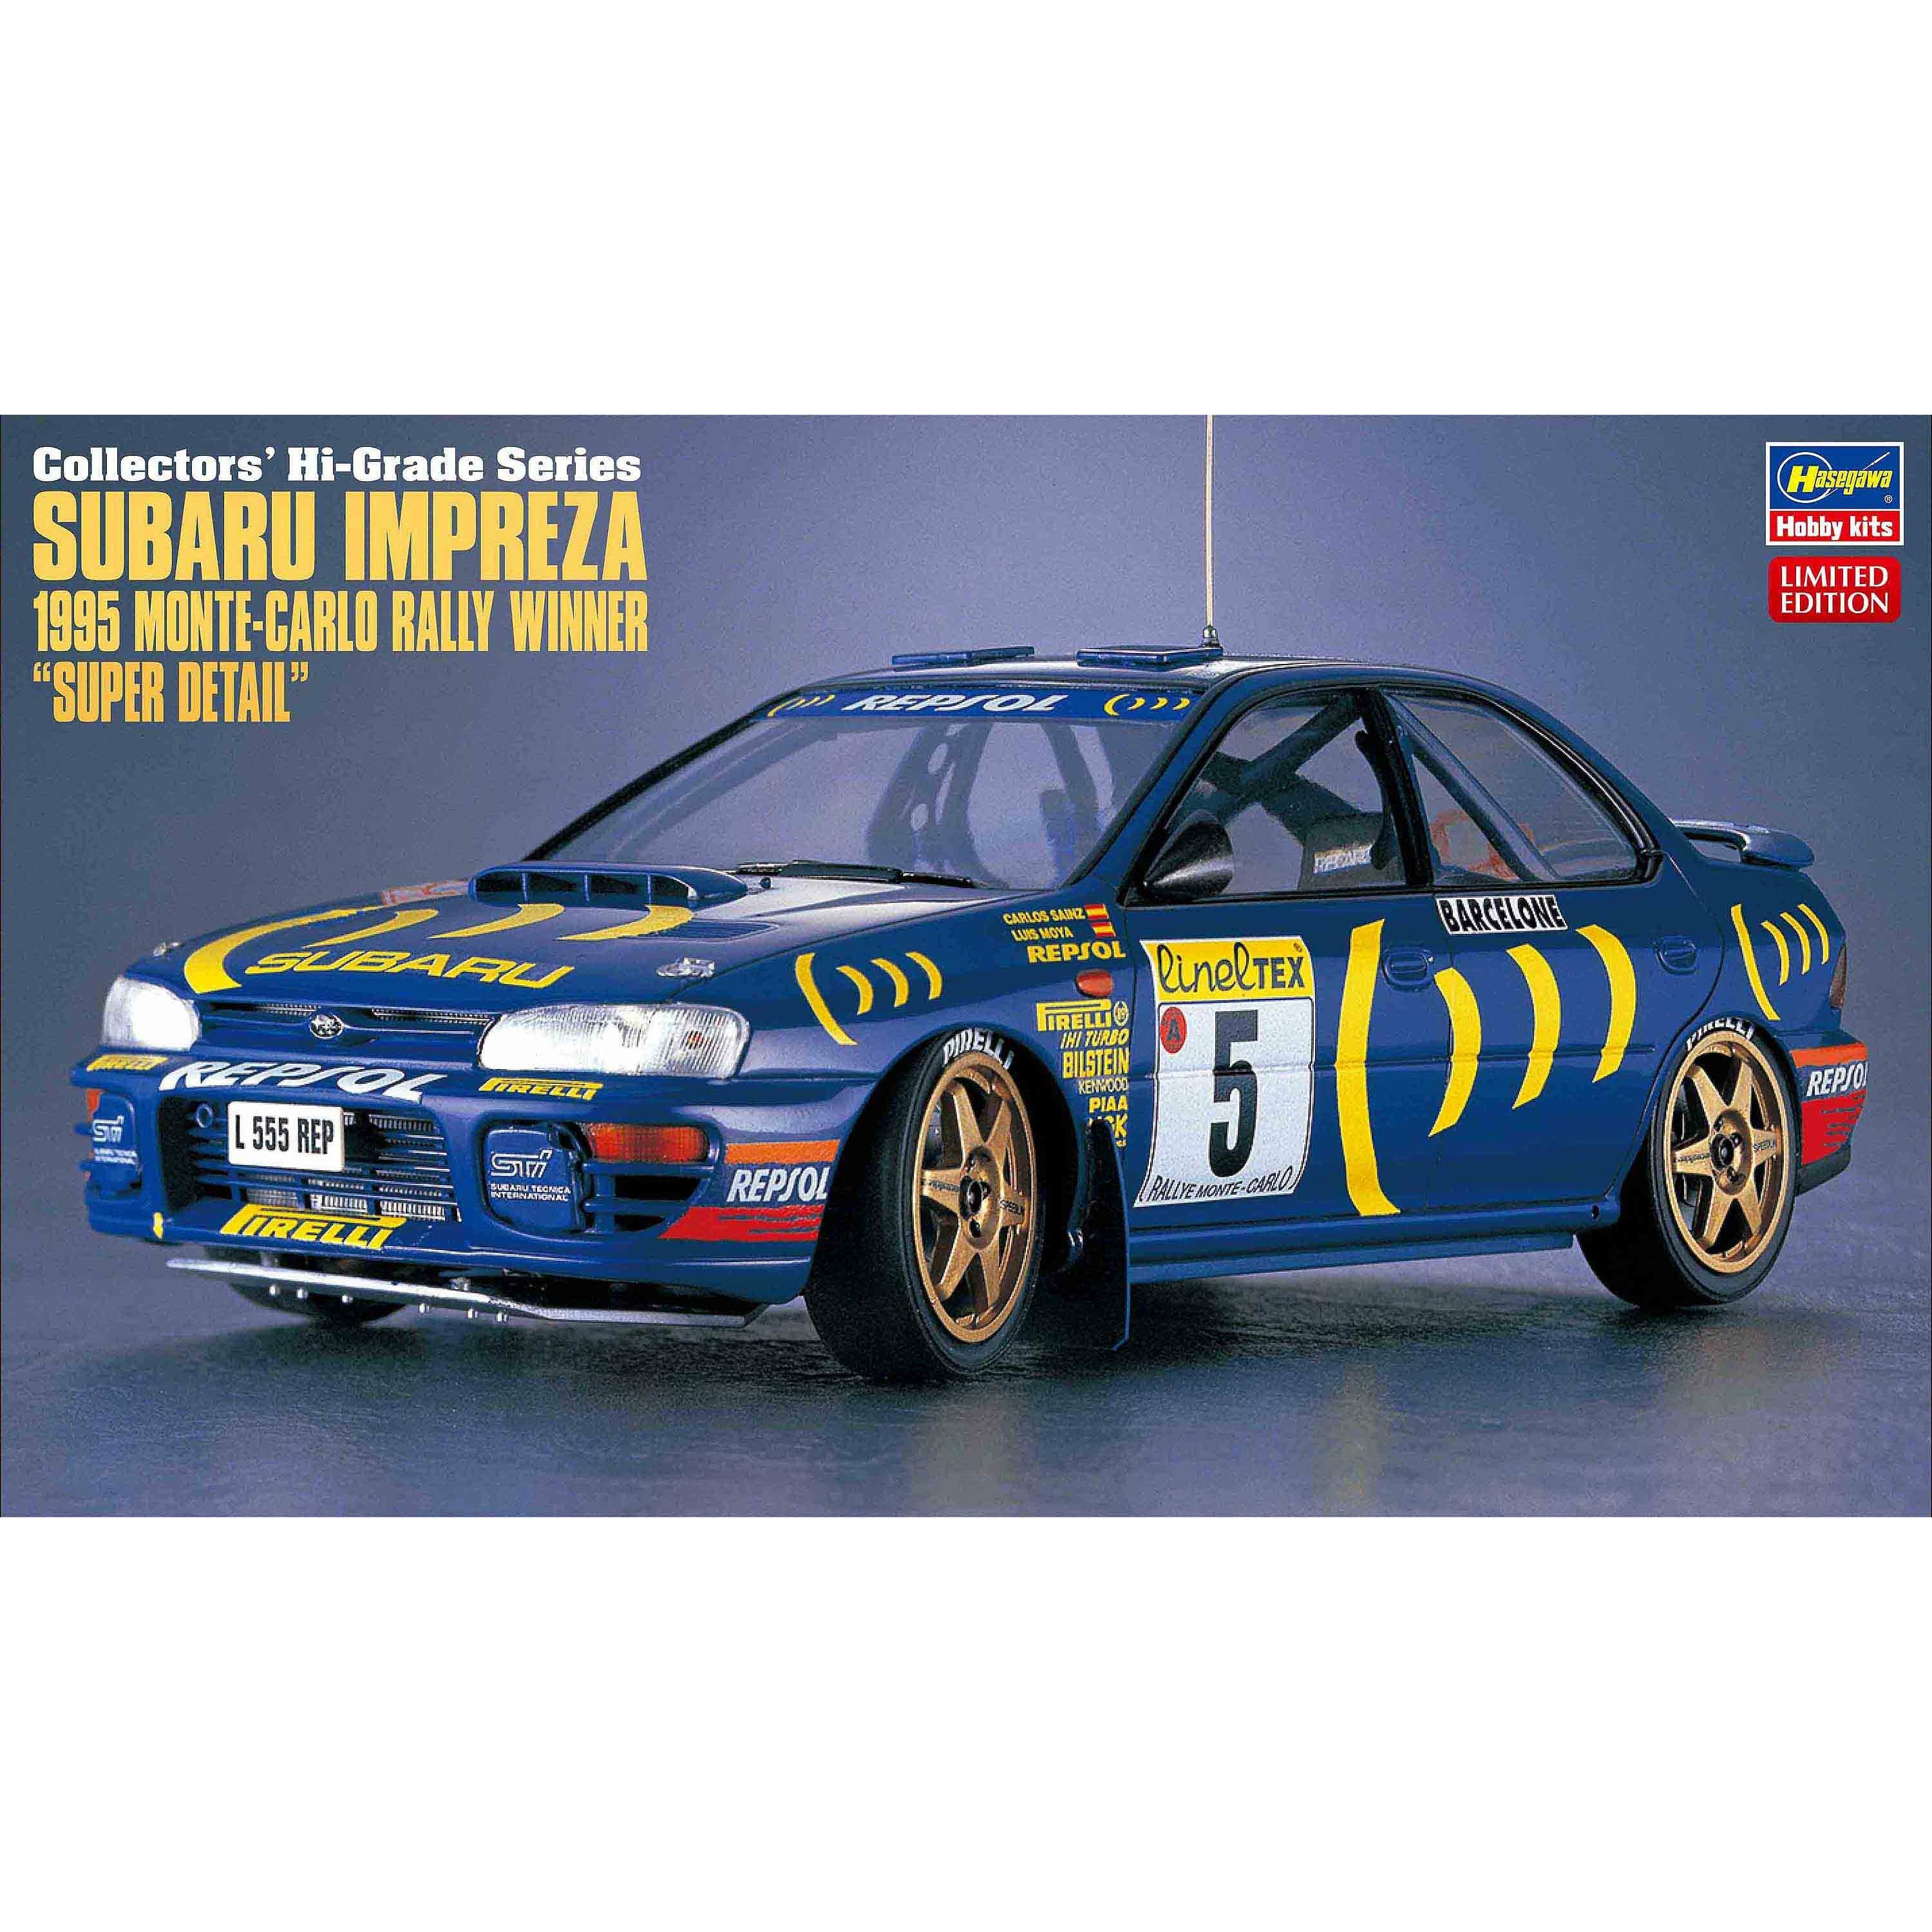 Subaru Impreza 1995 Monte-Carlo Rally Winner 'Super Detail' 1/24 #51151 by Hasegawa